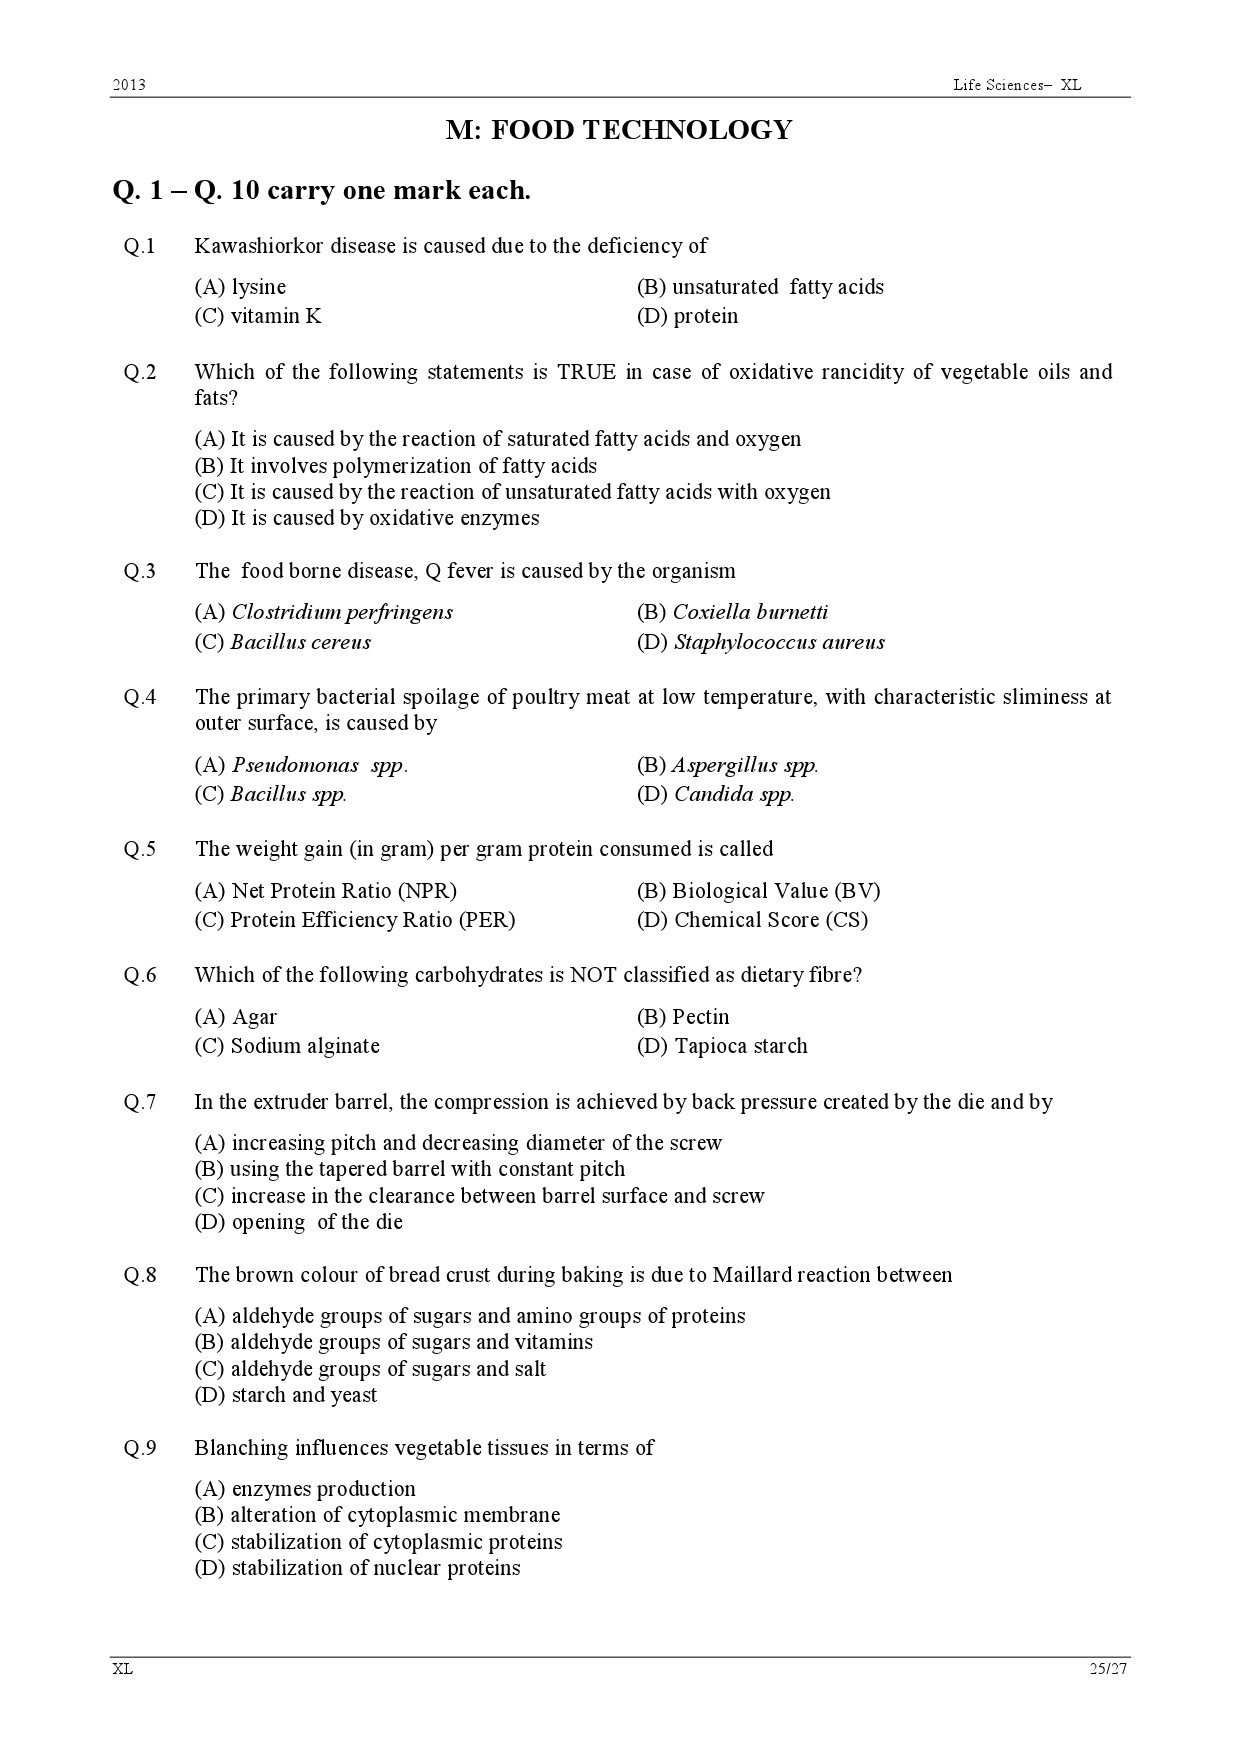 GATE Exam Question Paper 2013 Life Sciences 25